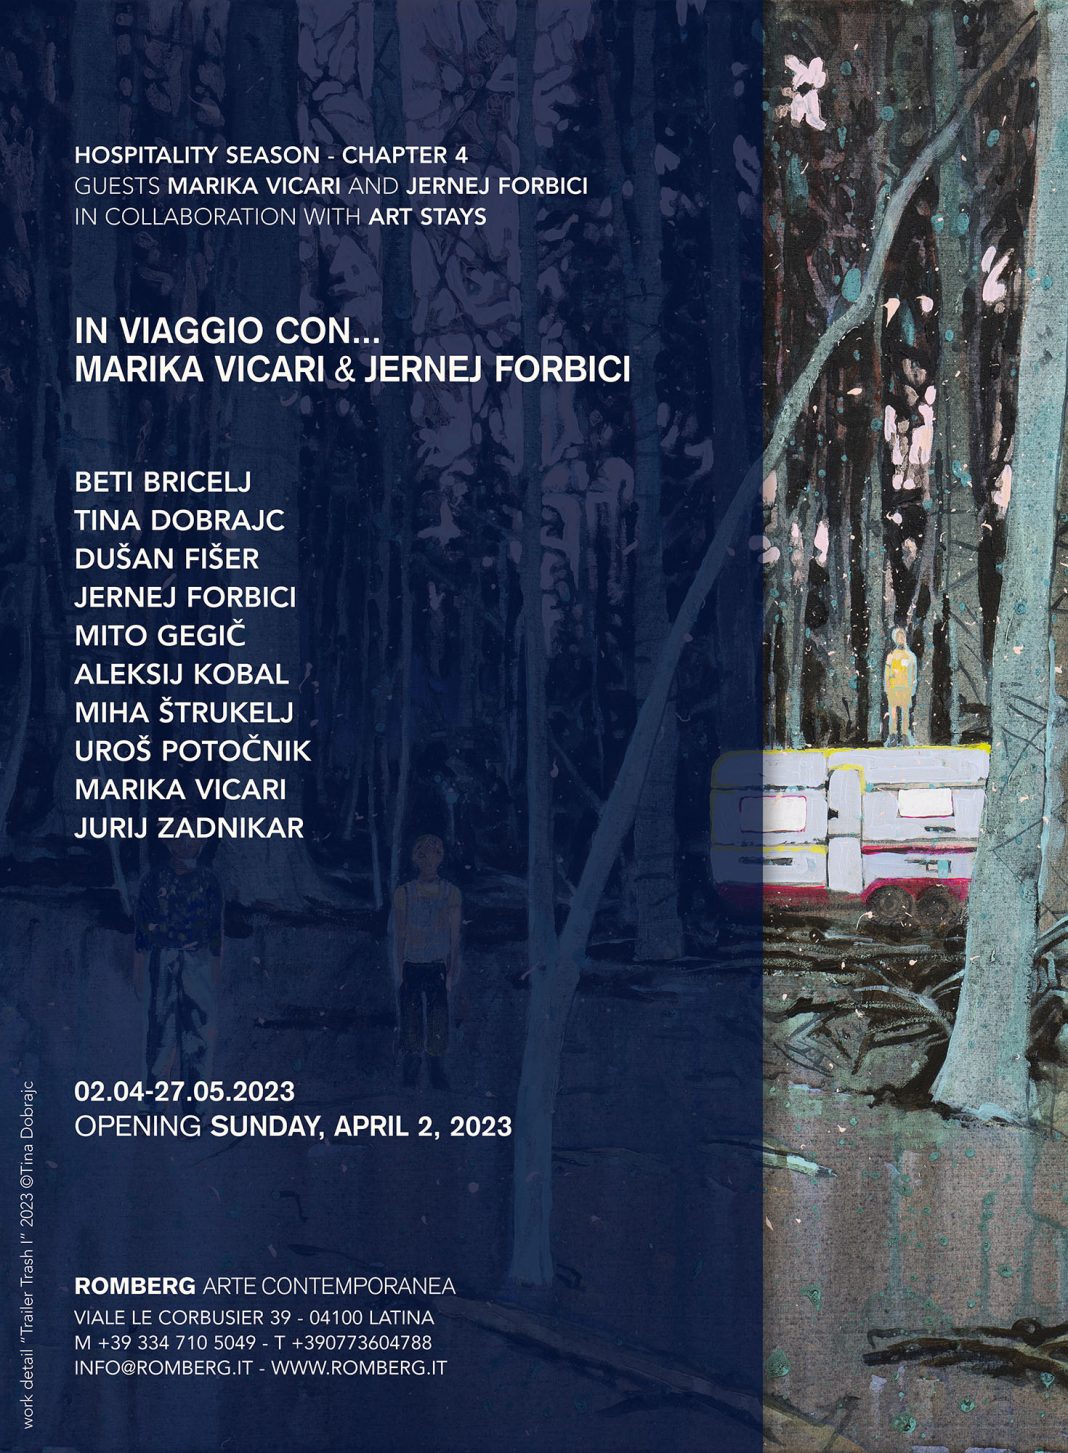 Marika Vicari / Jernej Forbici – In viaggio con…https://www.exibart.com/repository/media/formidable/11/img/1a6/In-viaggio-con-Marika-e-Jernej-_Romberg_-April-2_2023-1068x1453.jpg